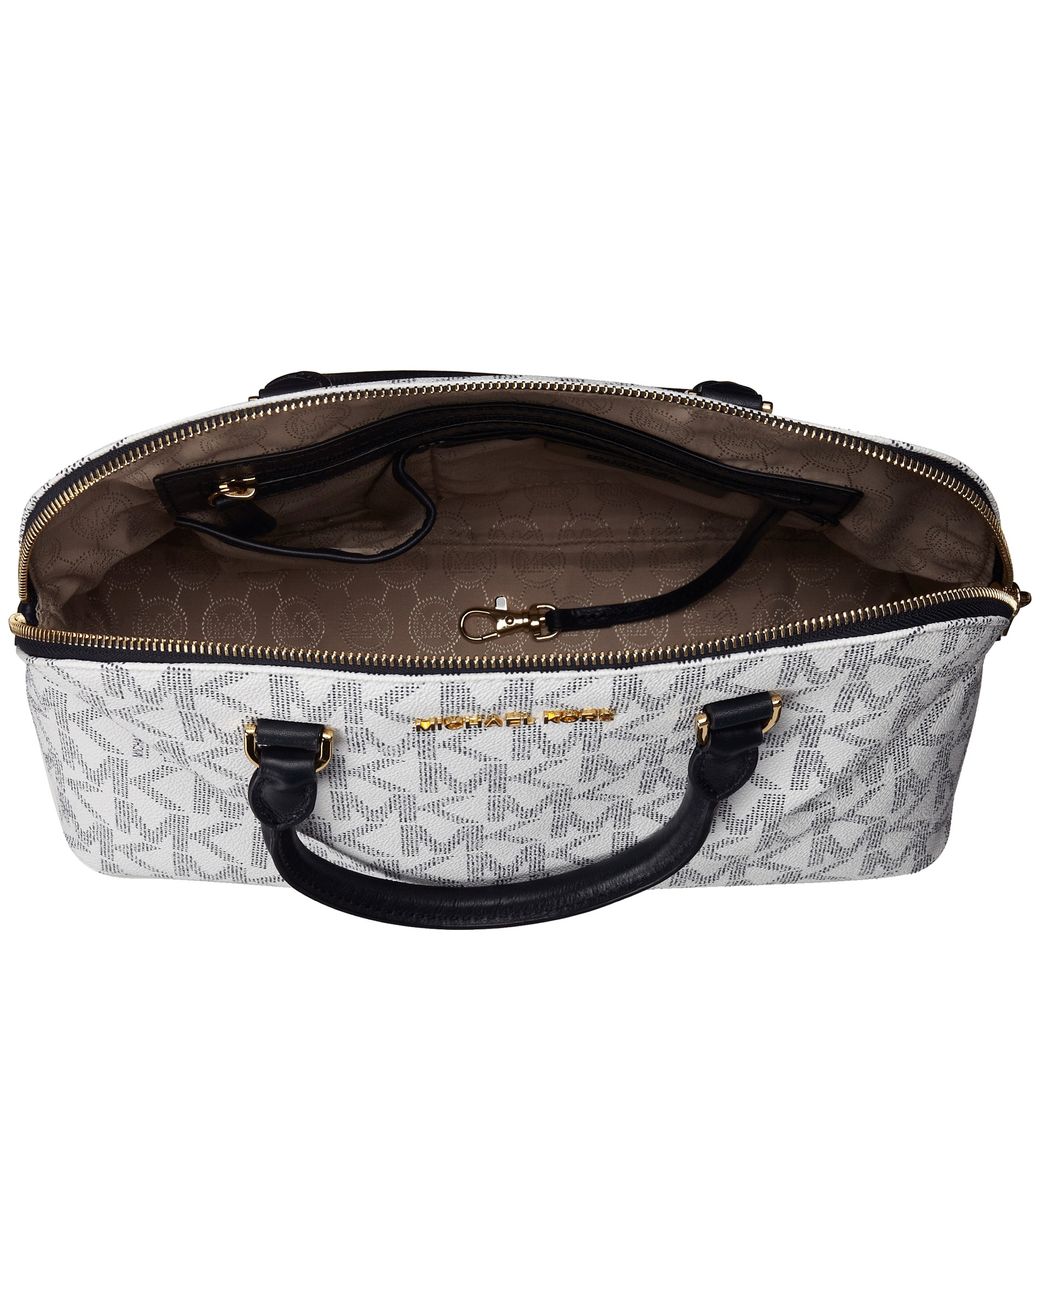 MICHAEL Michael Kors Cindy Large Dome Satchel WATERMELON: Handbags